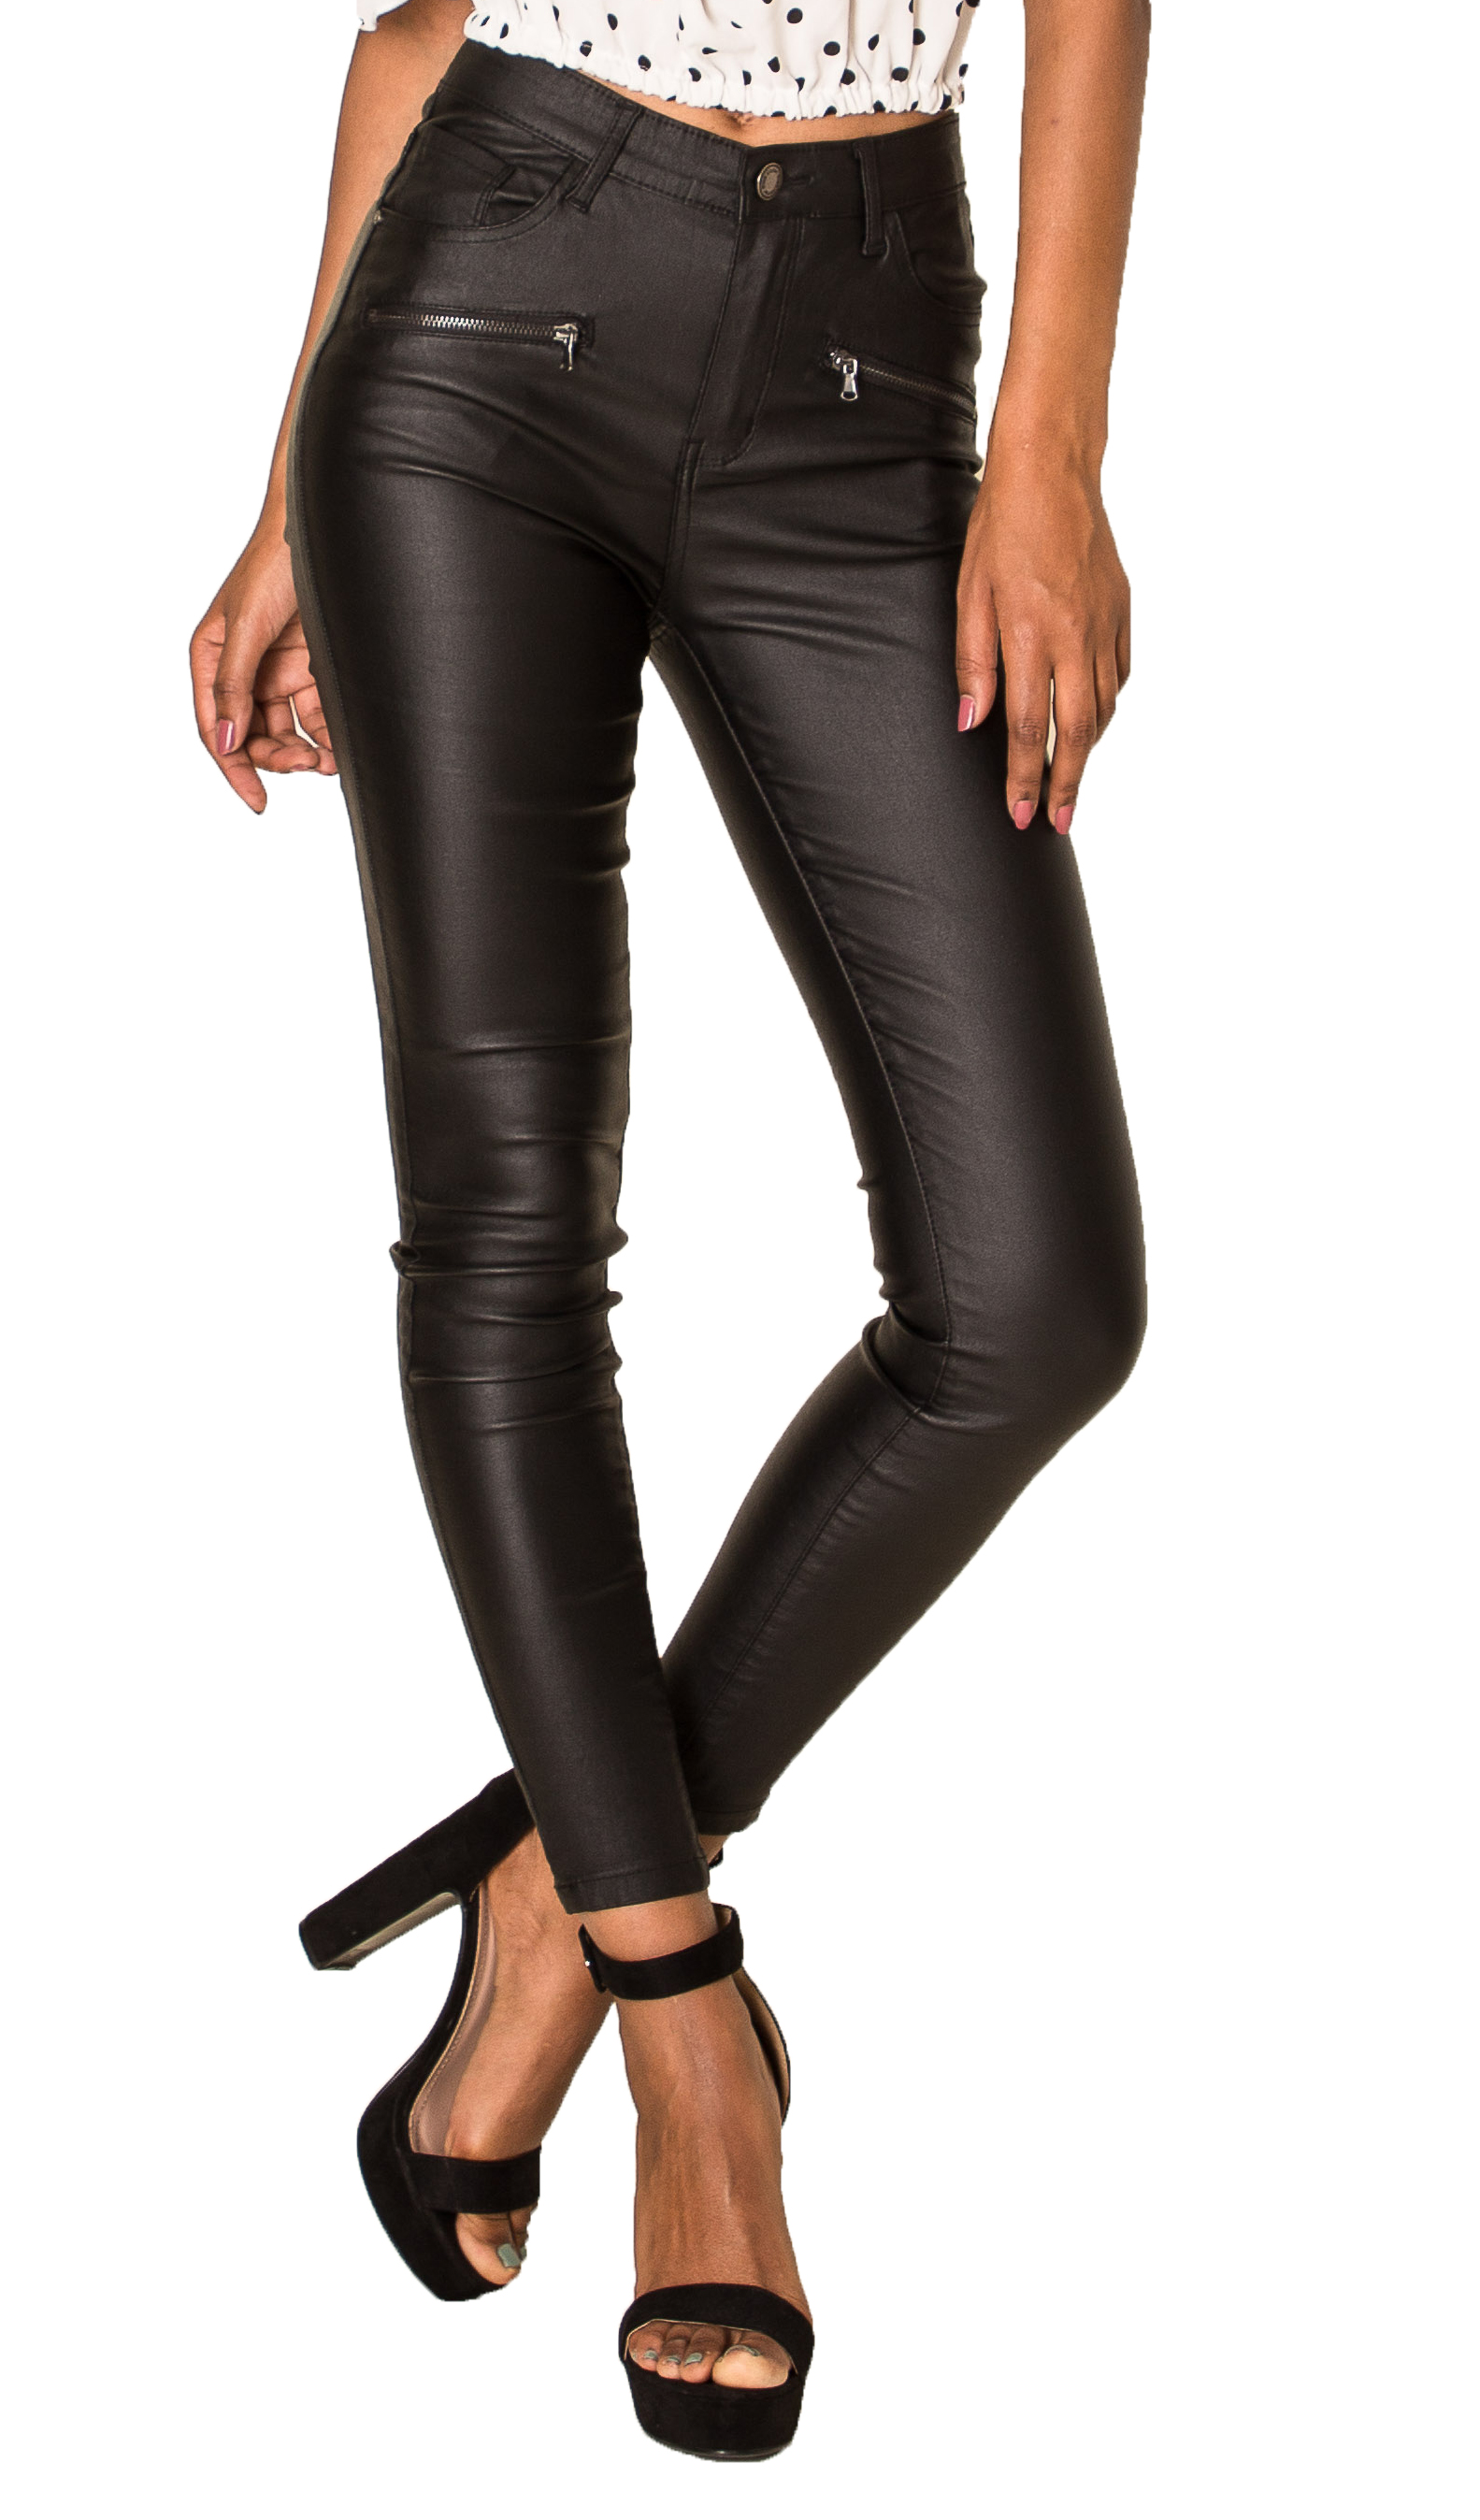 Womens Leather Look Trousers High Waist Faux Skinny Pants Stretch Leggings Ebay